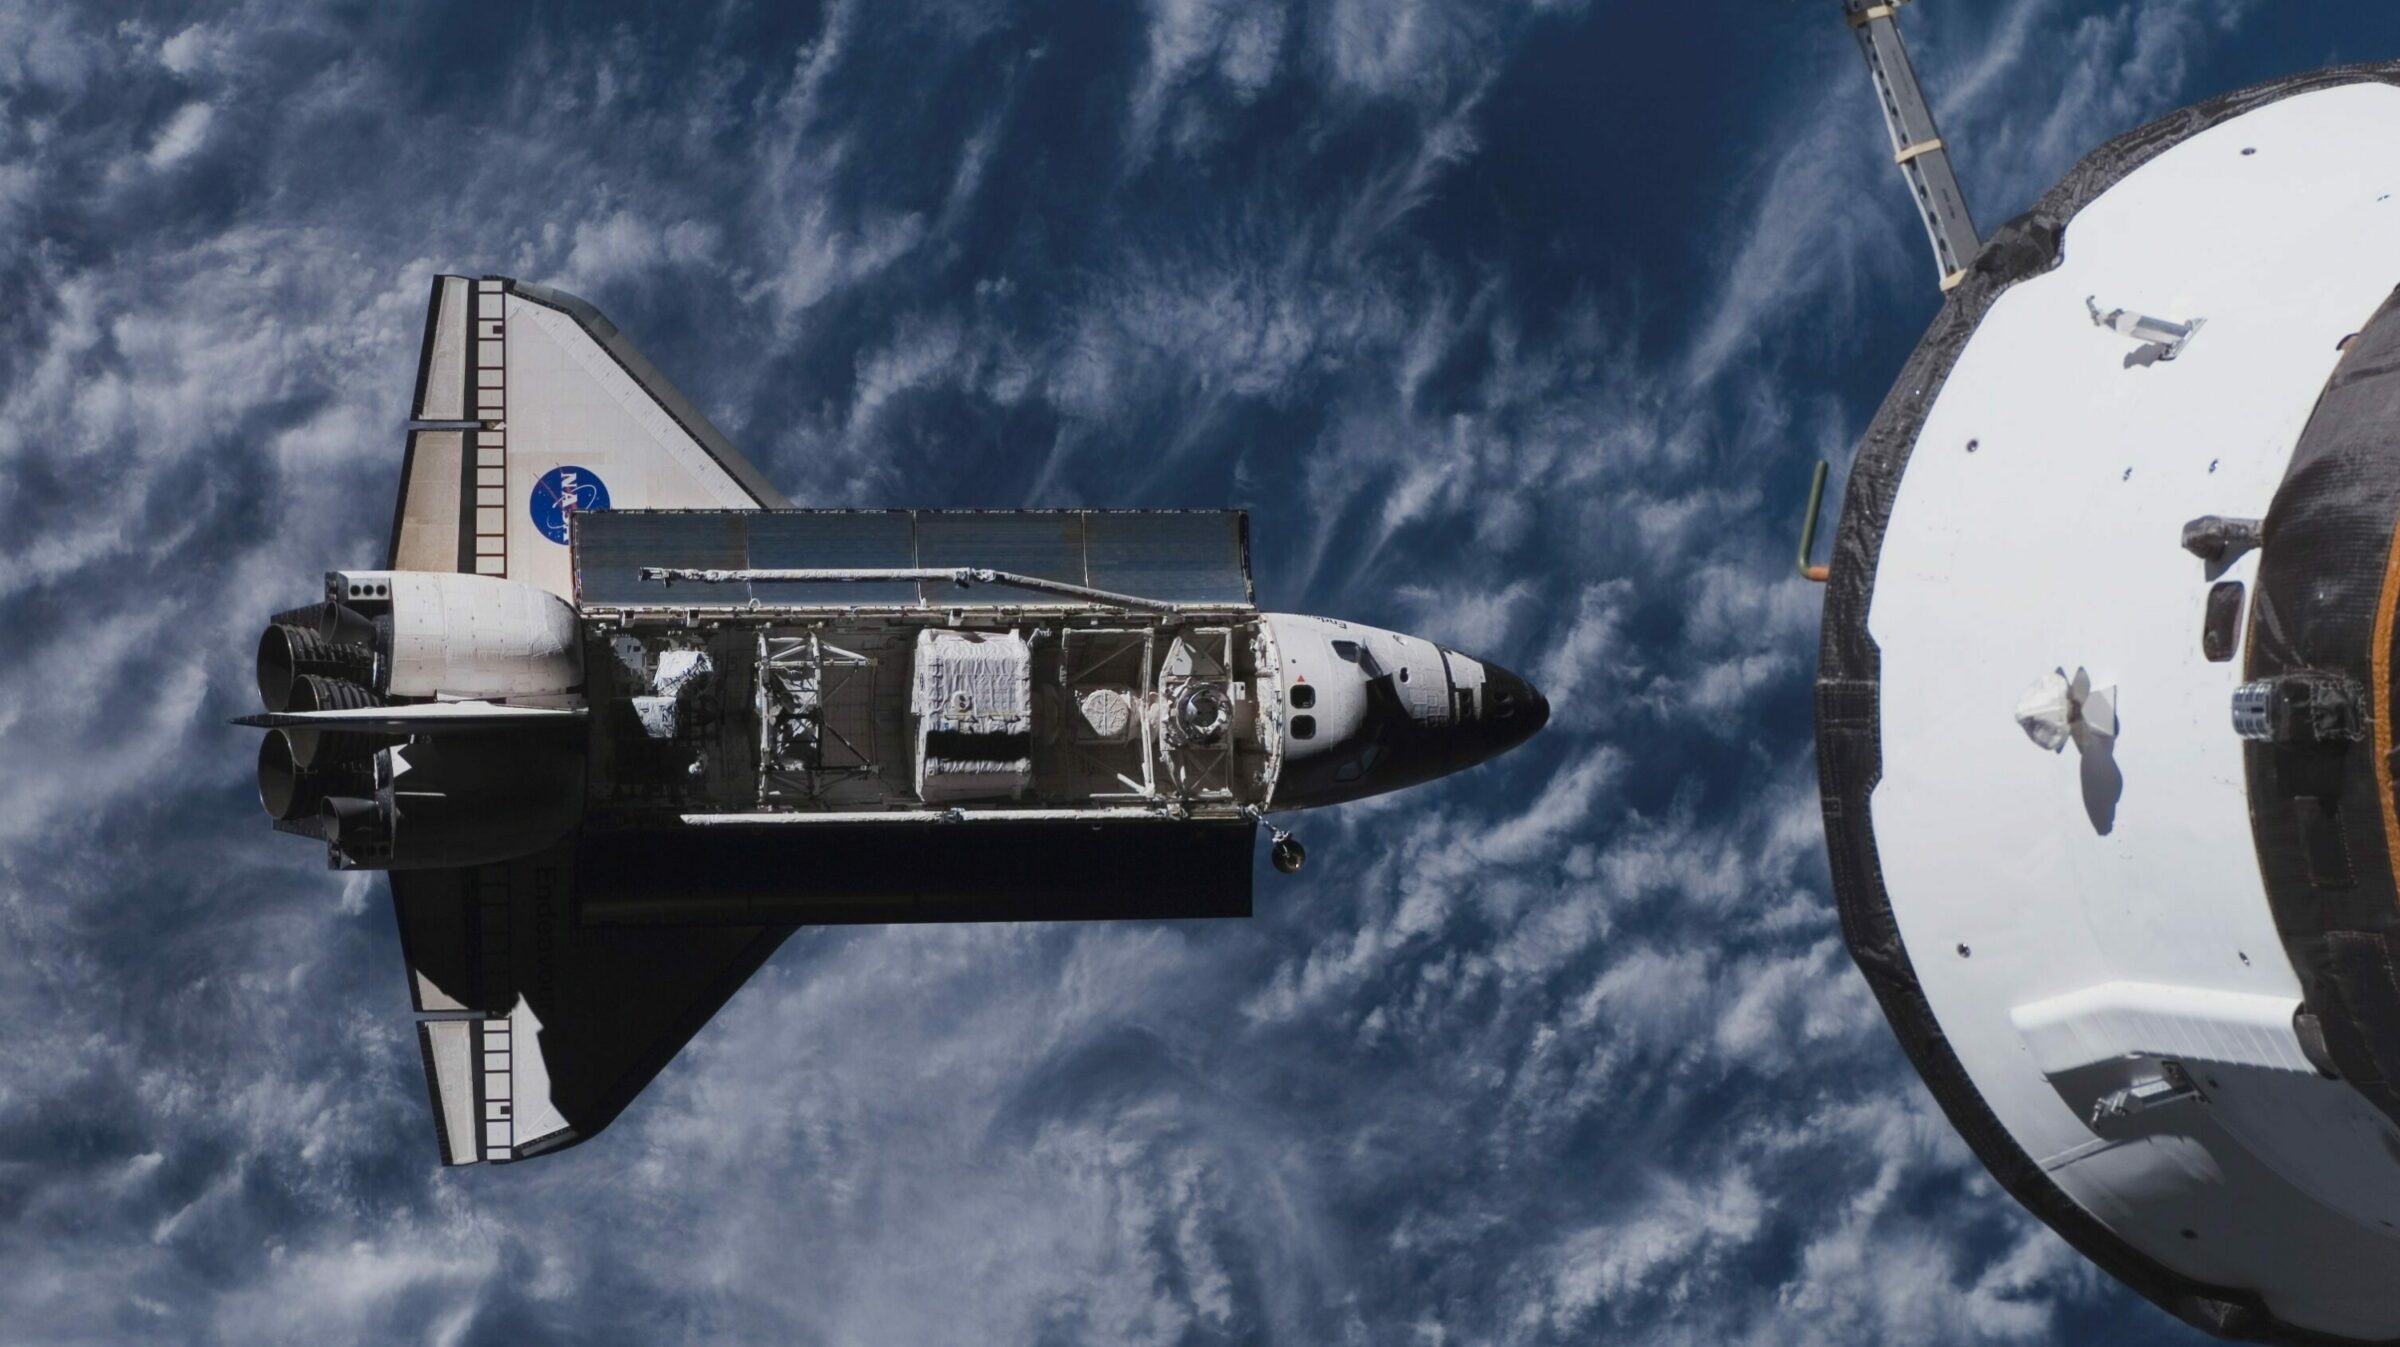 space shuttle endeavour location